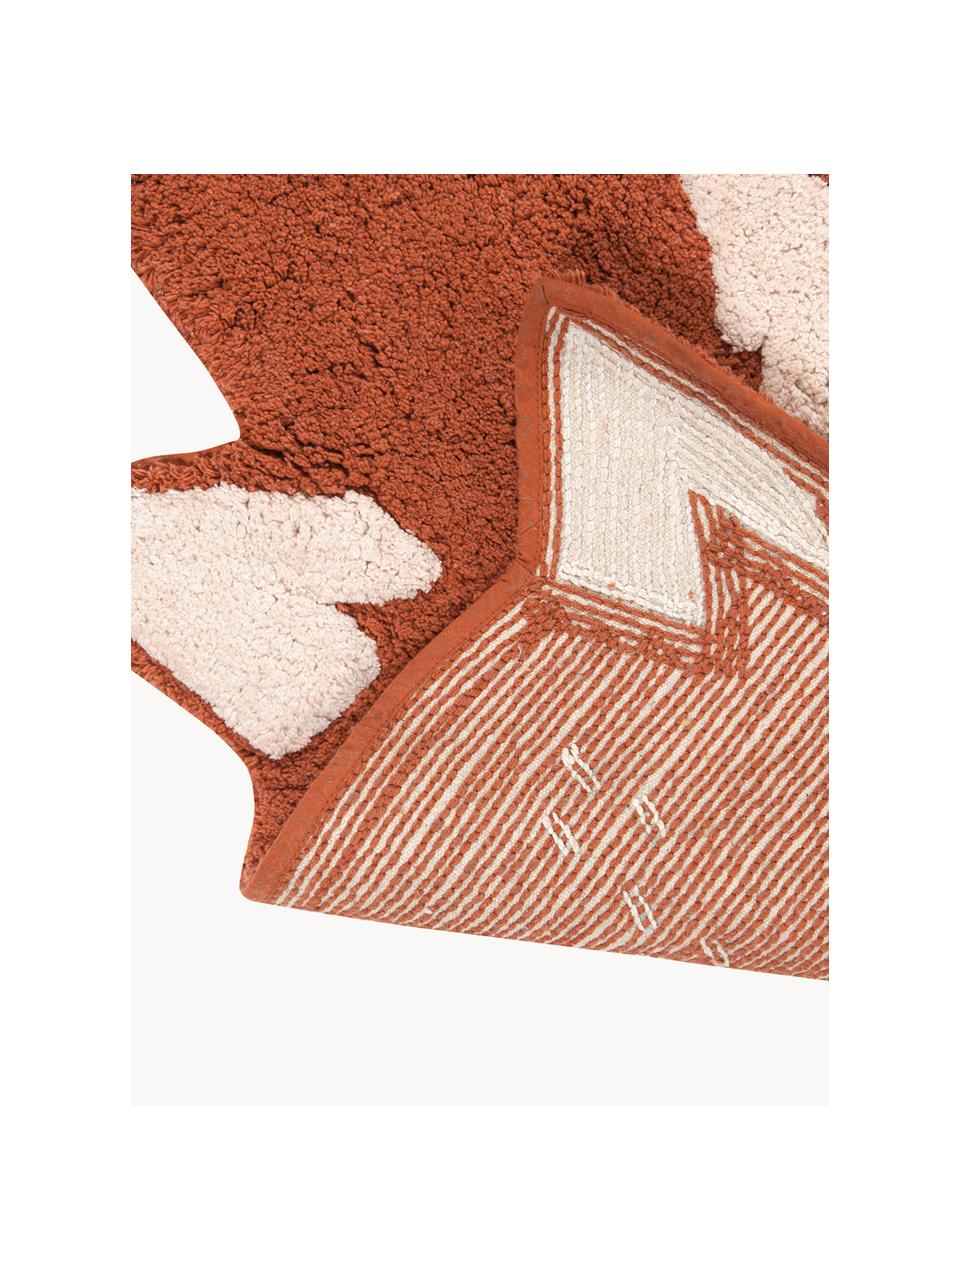 Detský koberec Little Fox, Bavlna, Nugátová, svetlobéžová, Š 110 x V 70 cm